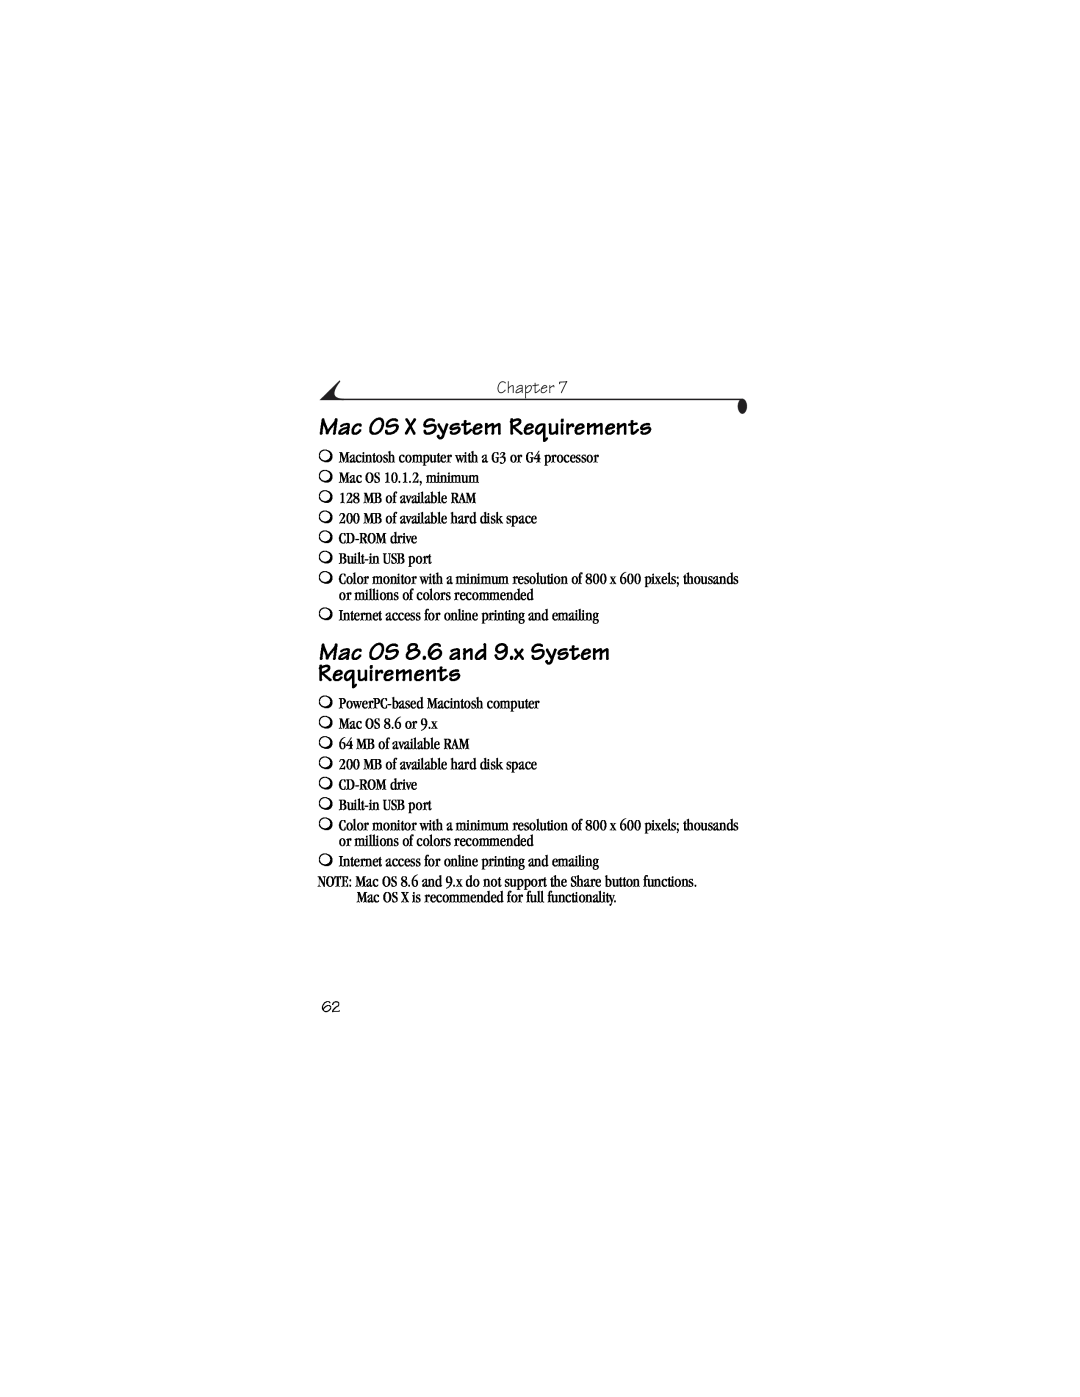 Kodak CX6230 manual Mac OS X System Requirements, Mac OS 8.6 and 9.x System Requirements, Chapter 